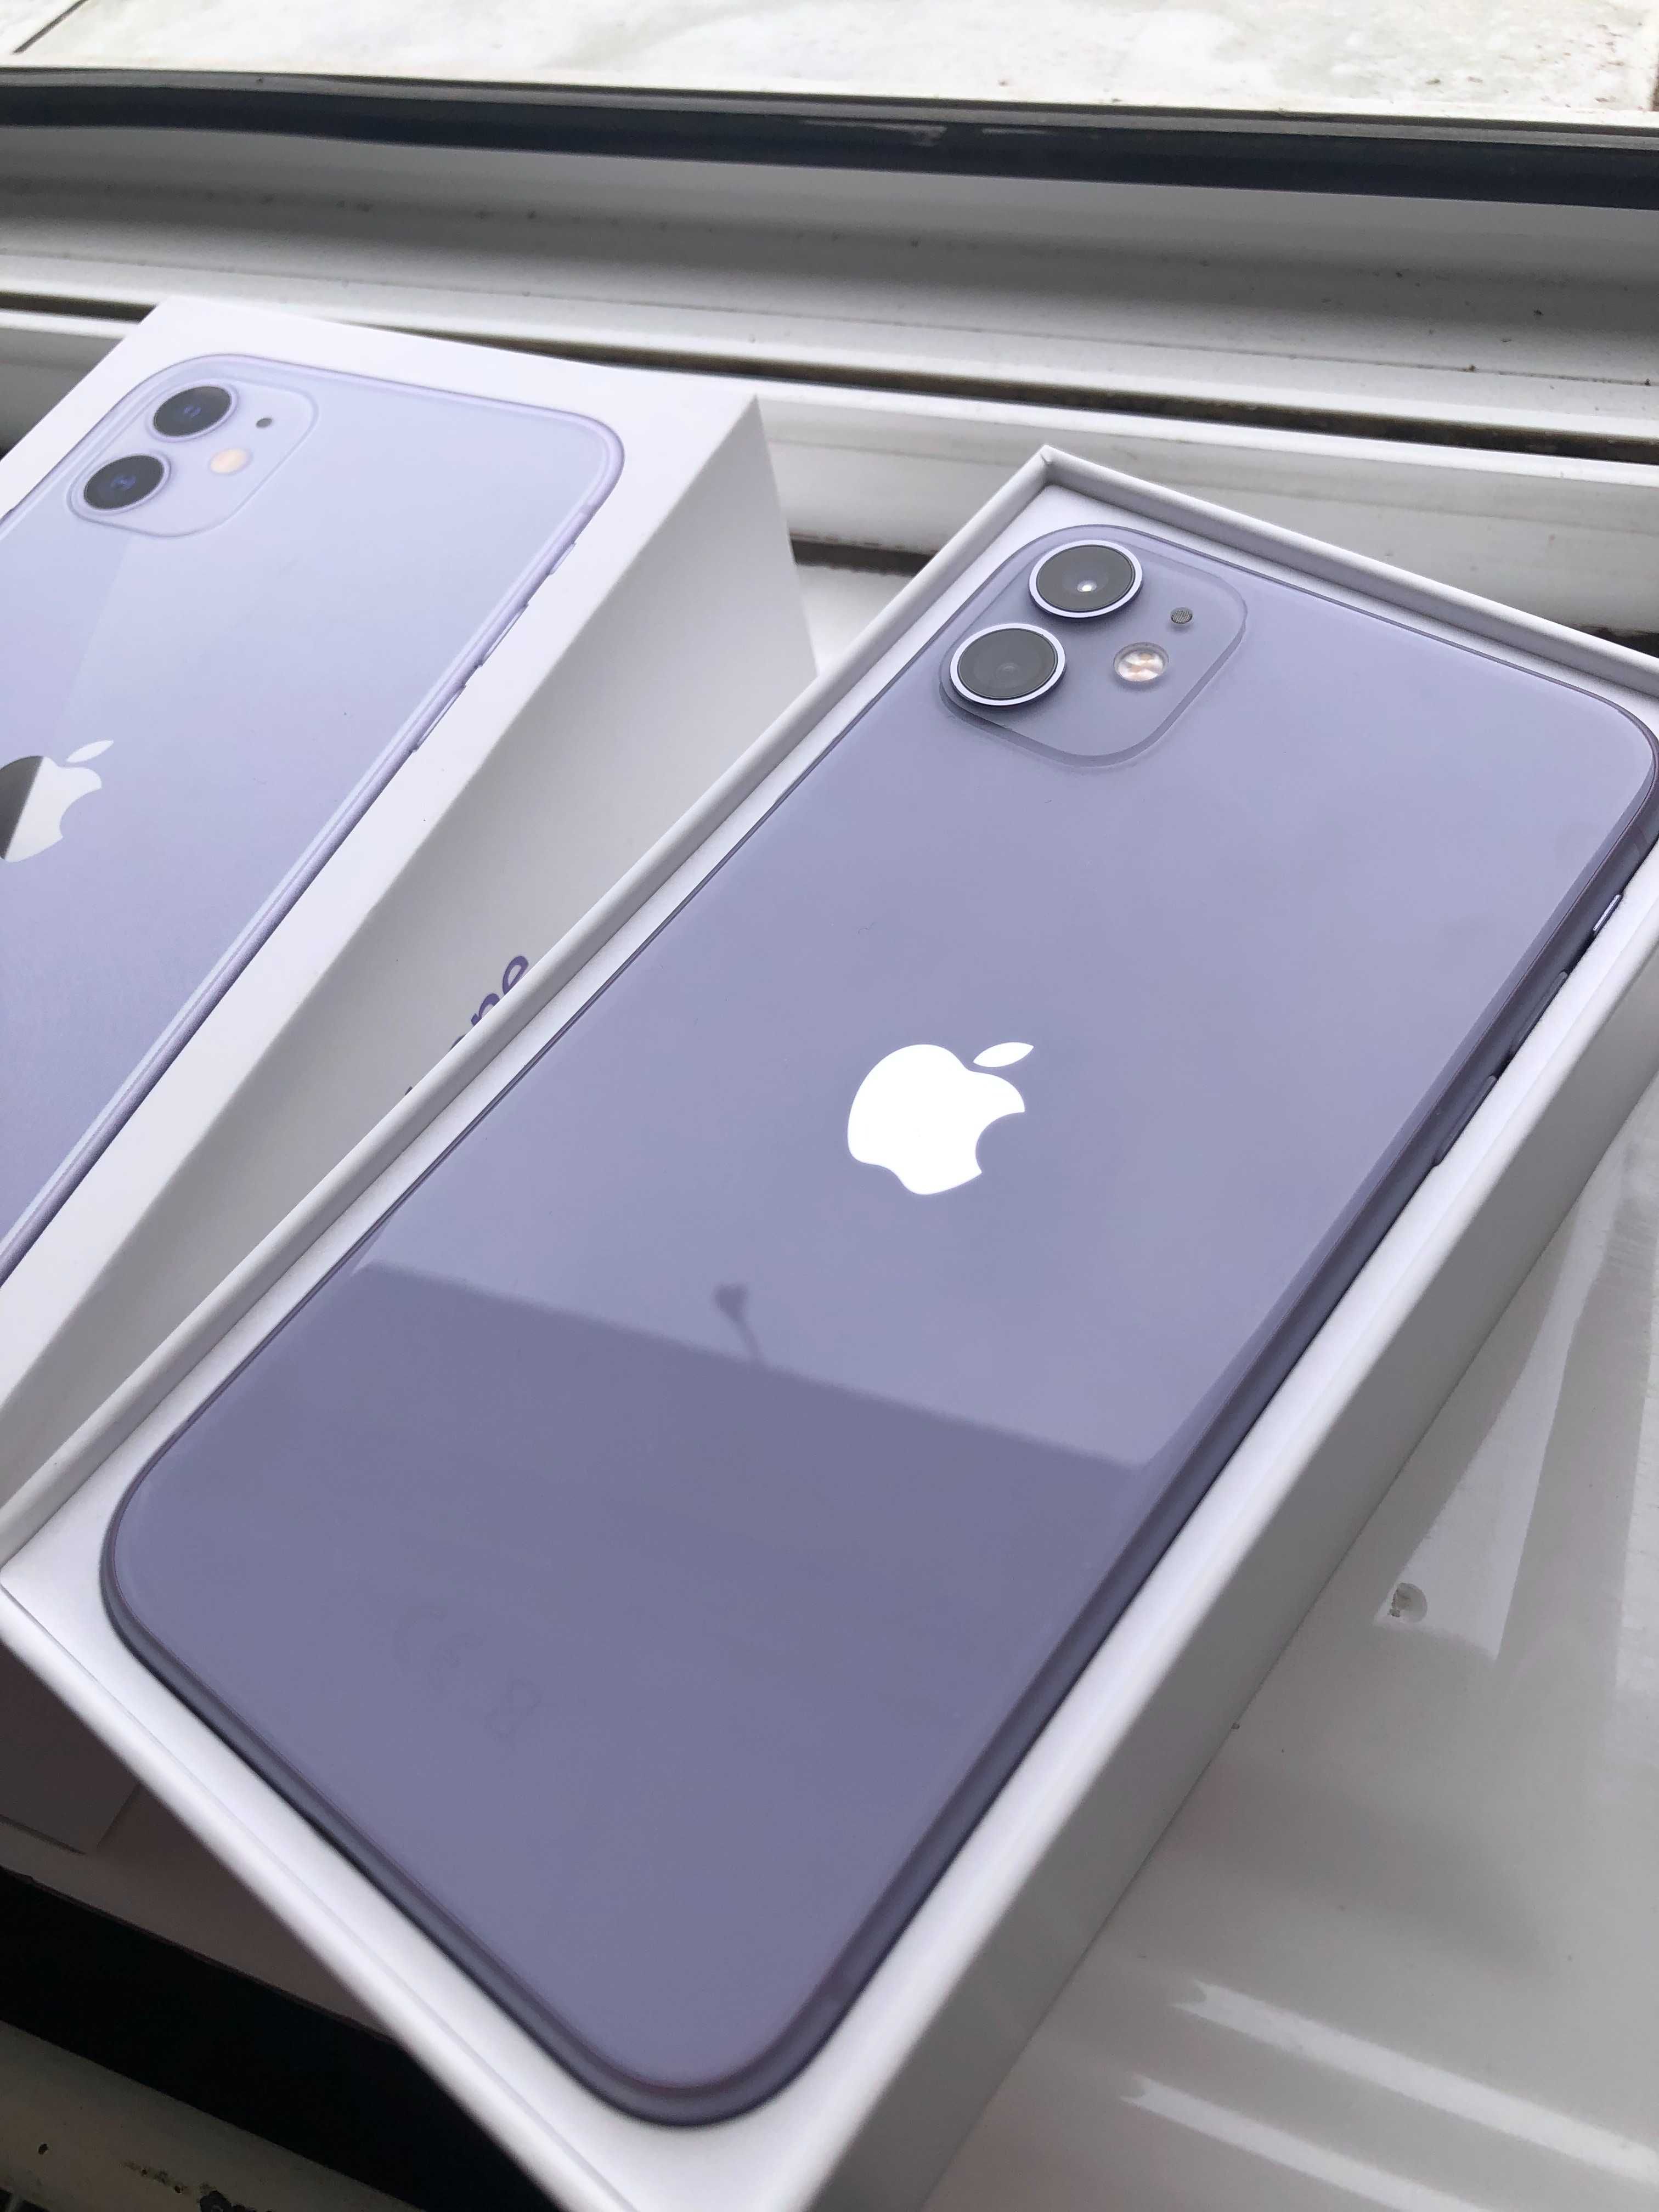 Smart iPhone 11 Sanatatea Purple 128 GB Editie Limitata ca NOU